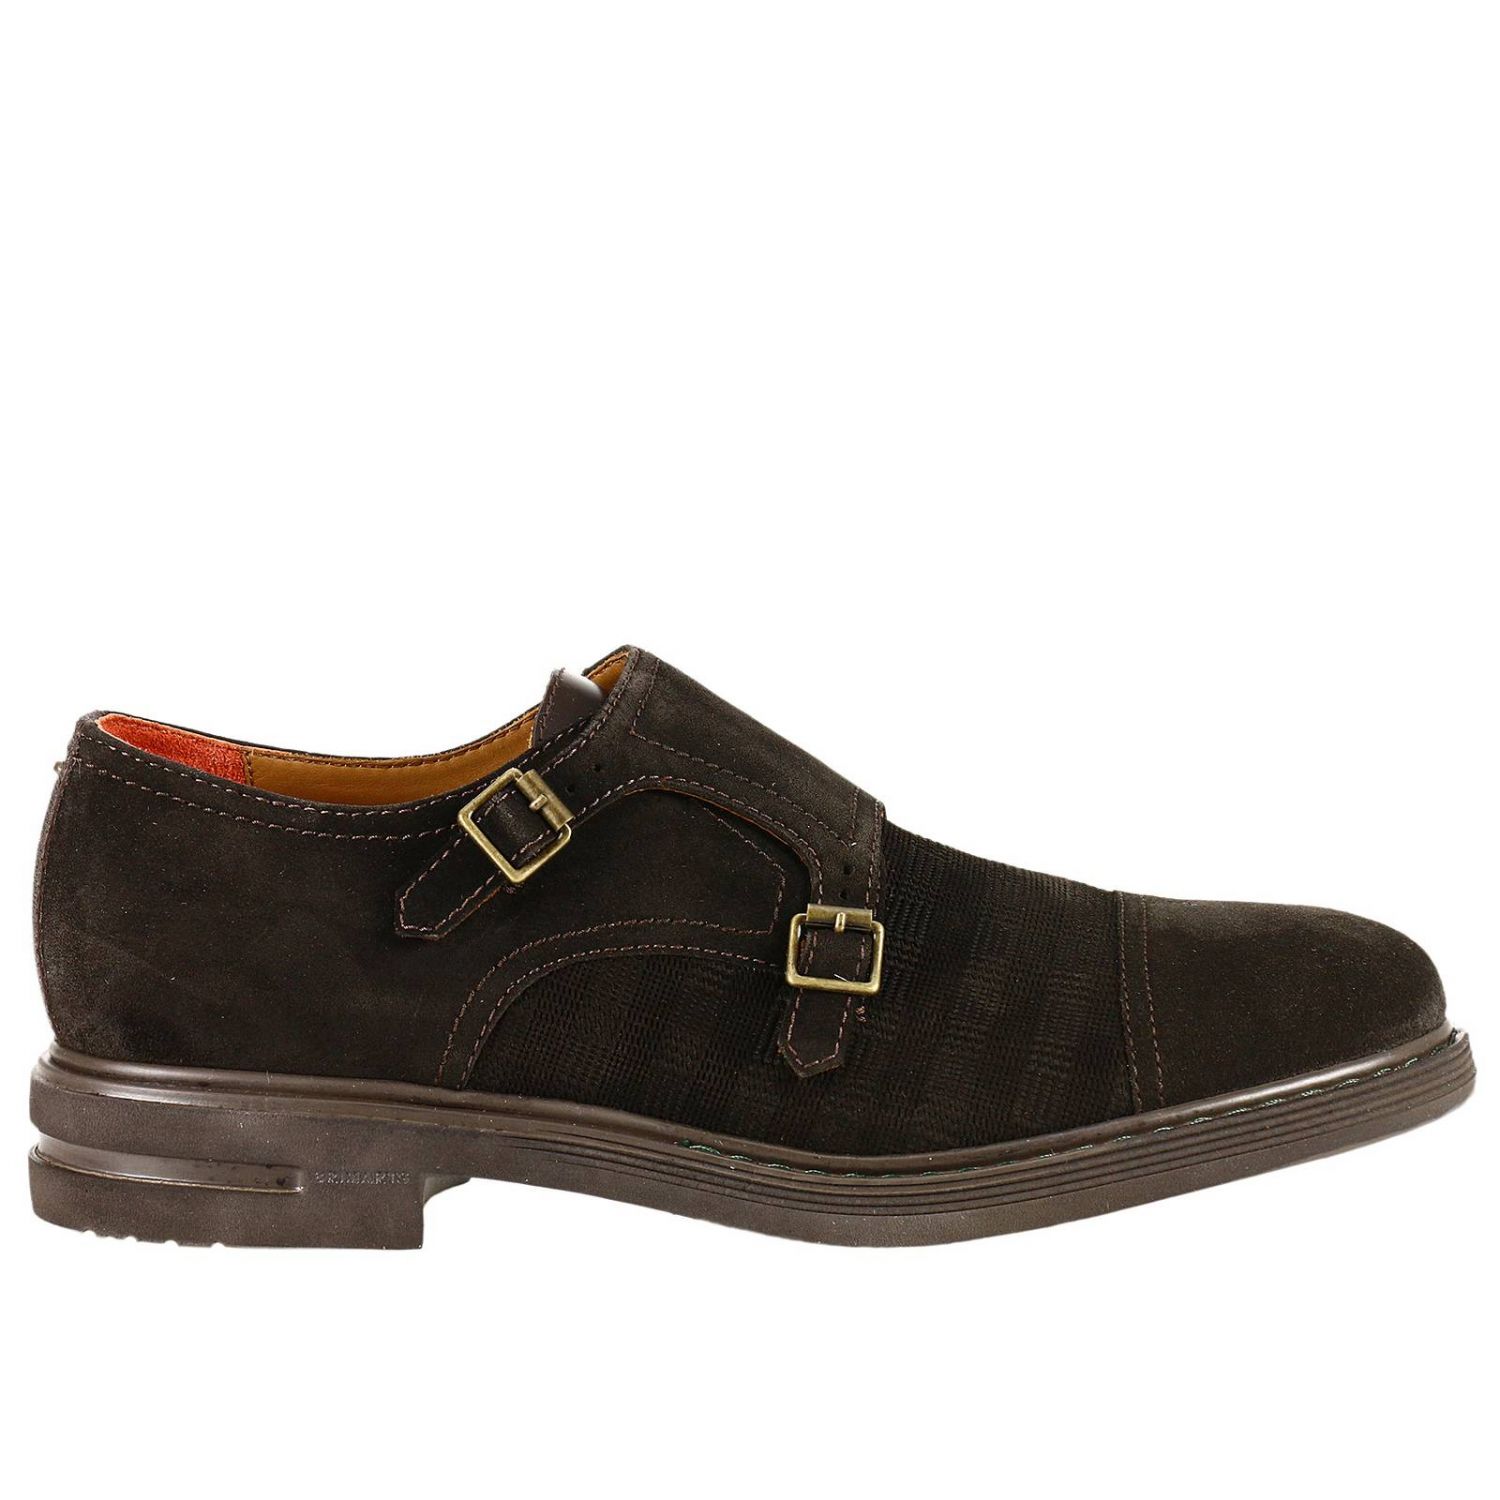 Brimarts Outlet: Shoes men - Dark | Brogue Shoes Brimarts 315376 1814 ...